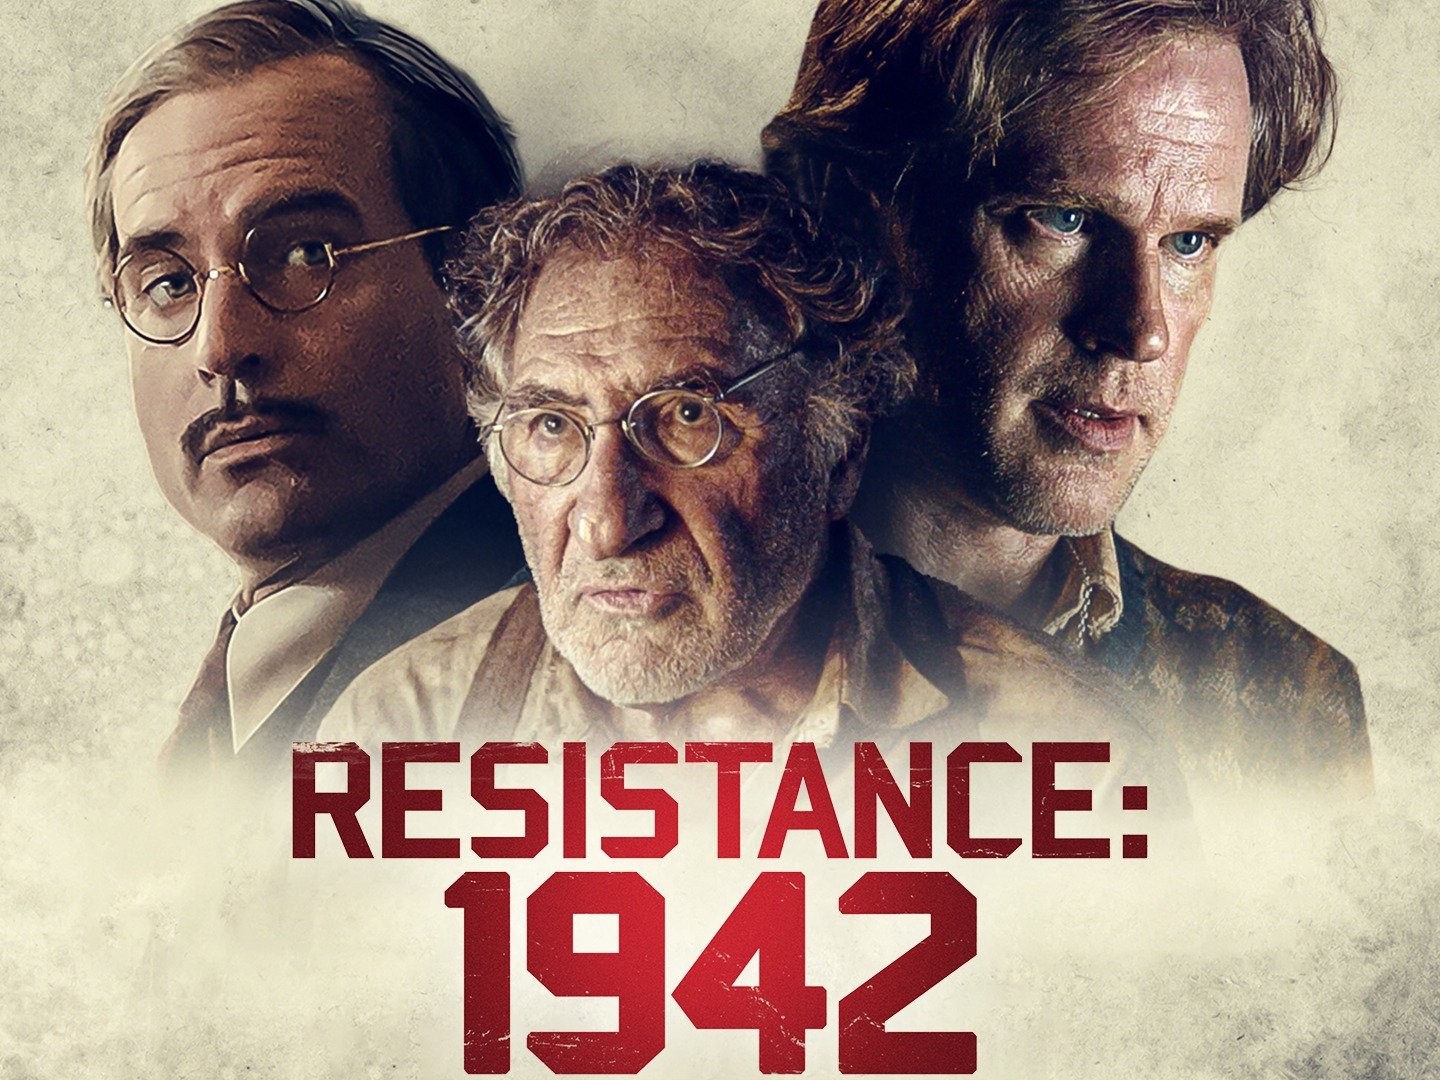 Resistance (2020 film) - Wikipedia